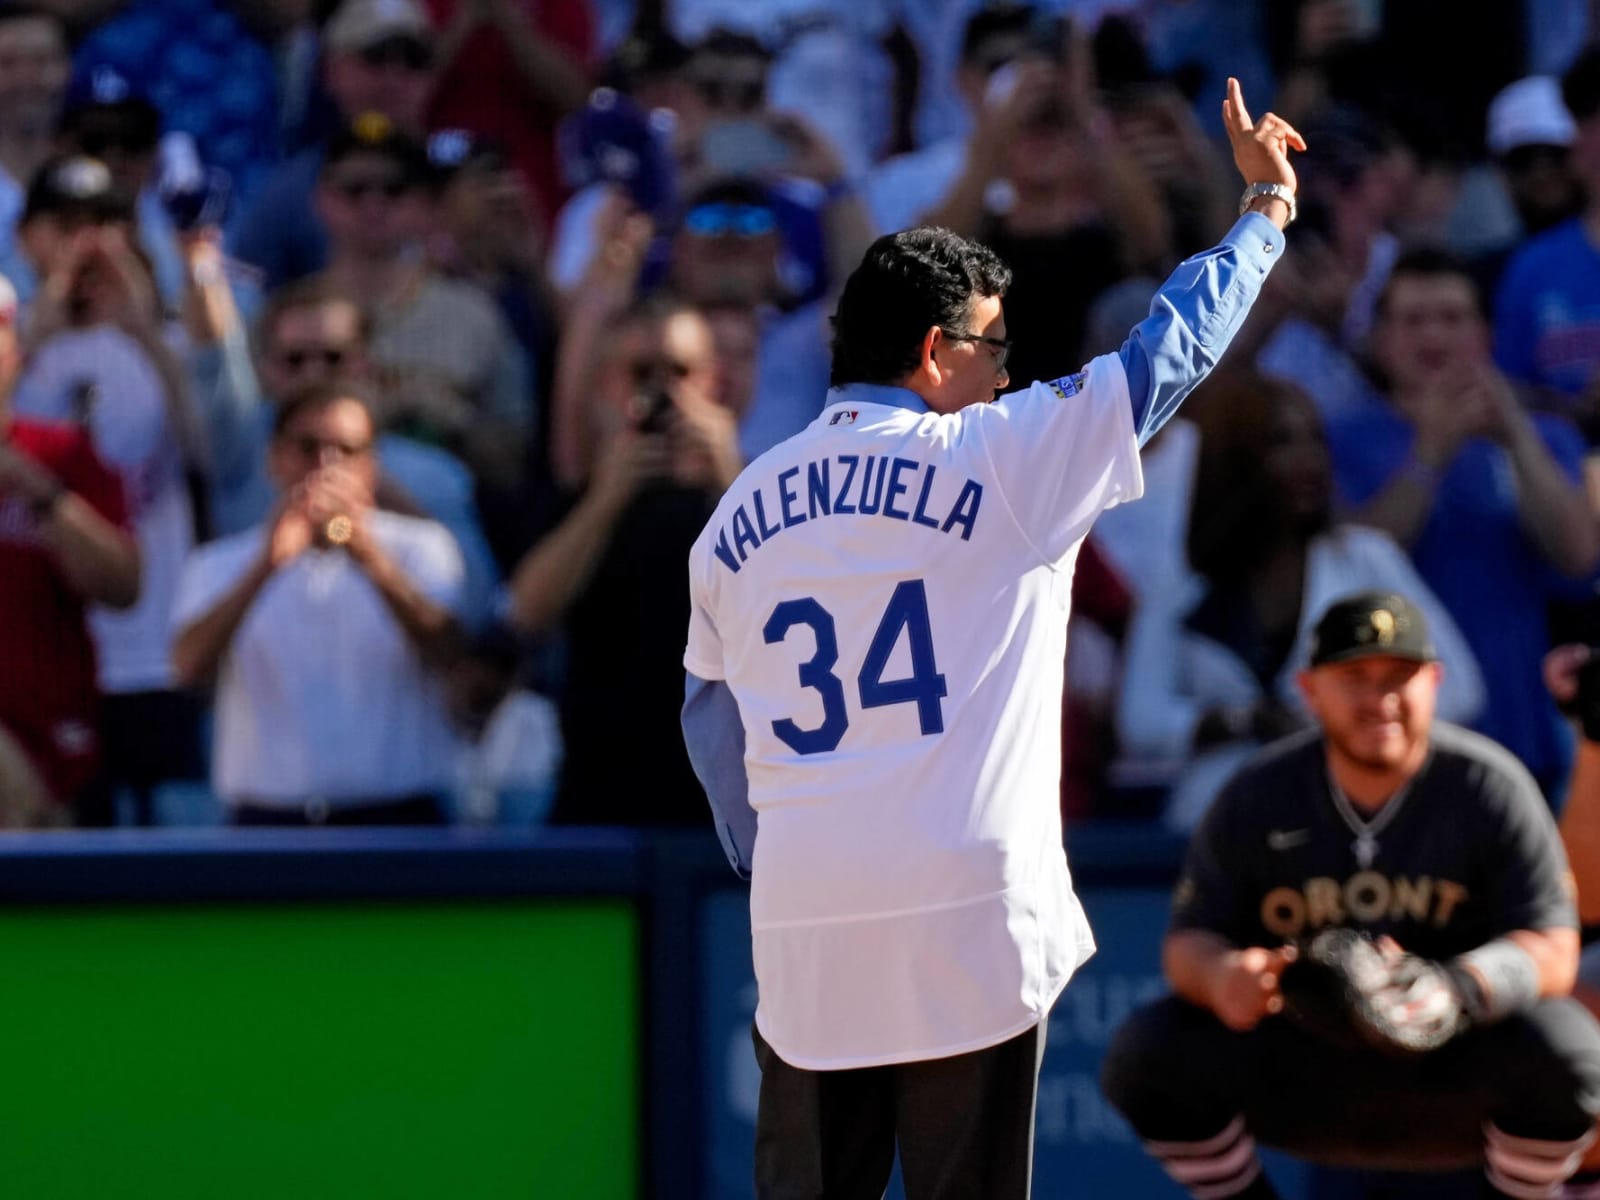 Fernandomania' lives again at Dodger Stadium with retirement of Valenzuela's  jersey – KGET 17